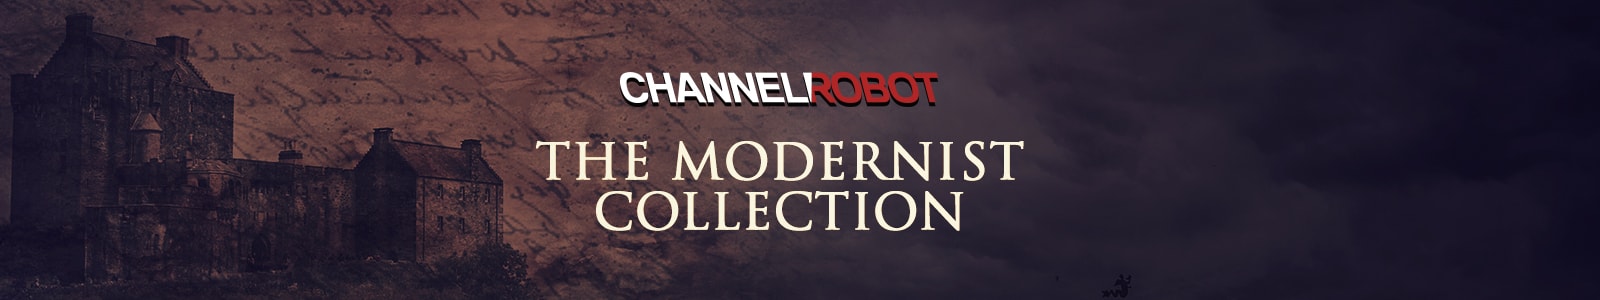 modernist bundle by channel robot